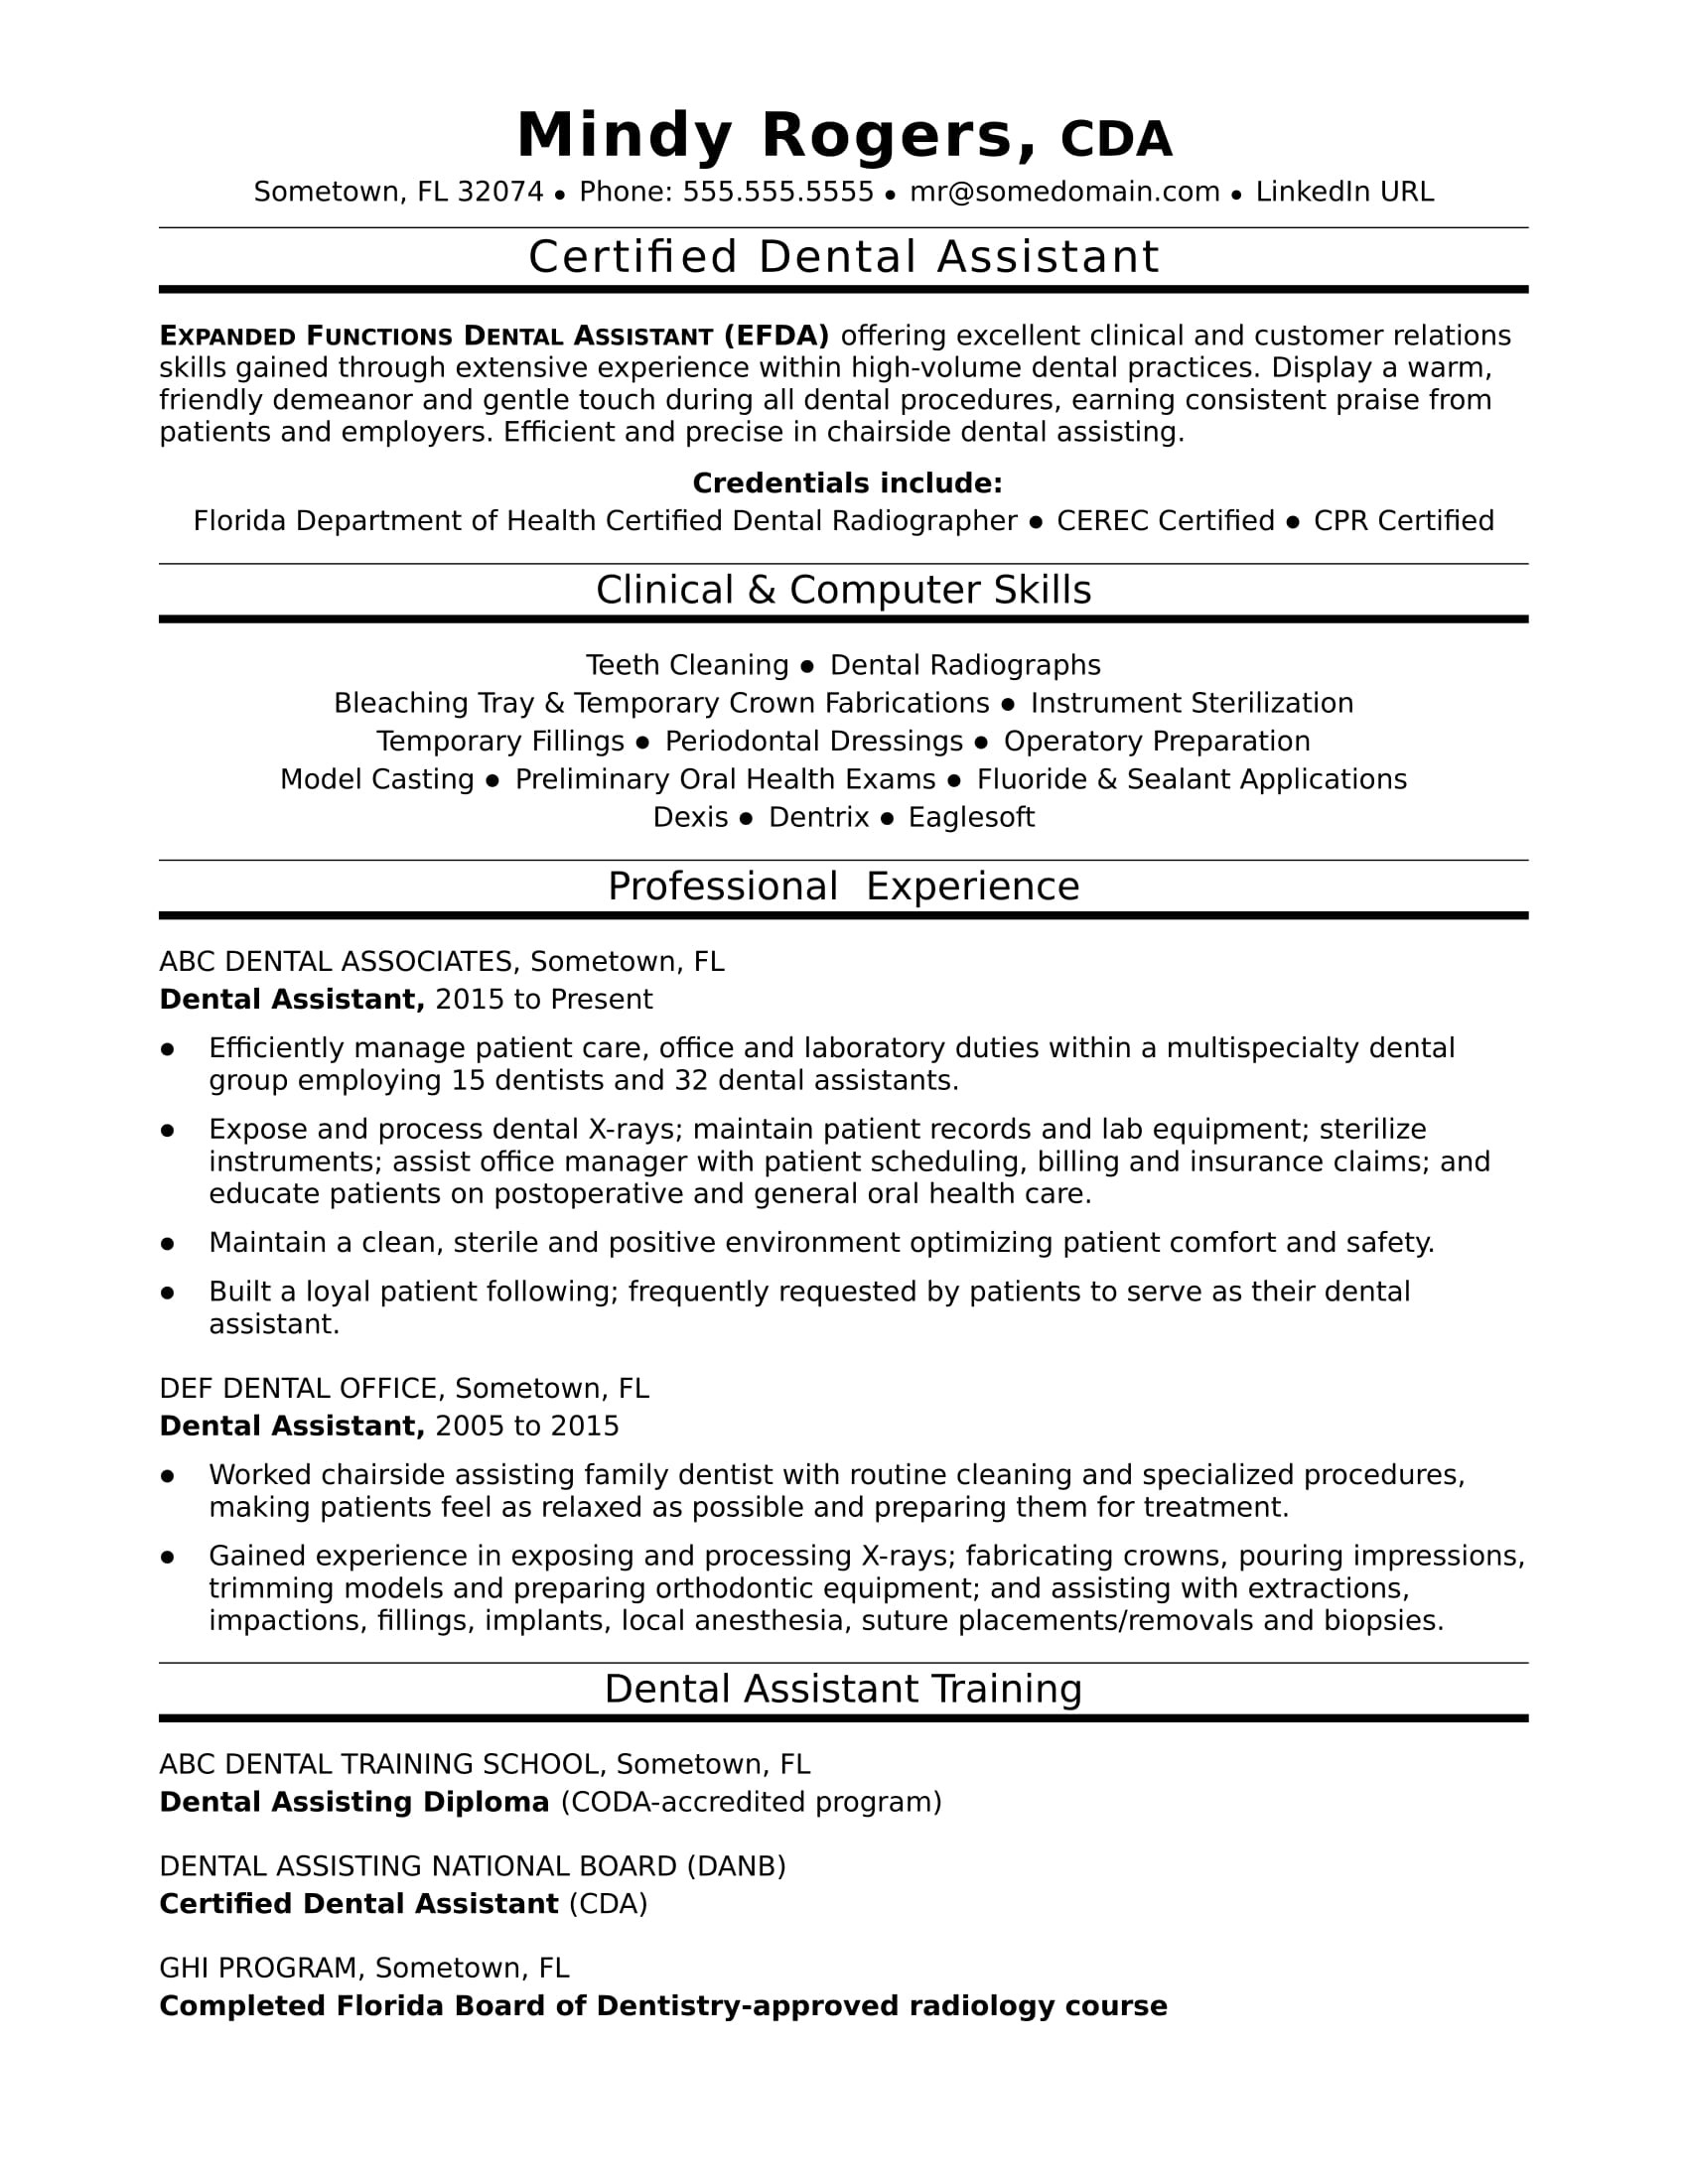 Sample Resume with Dental assistant Externship Experience Dental assistant Resume Monster.com